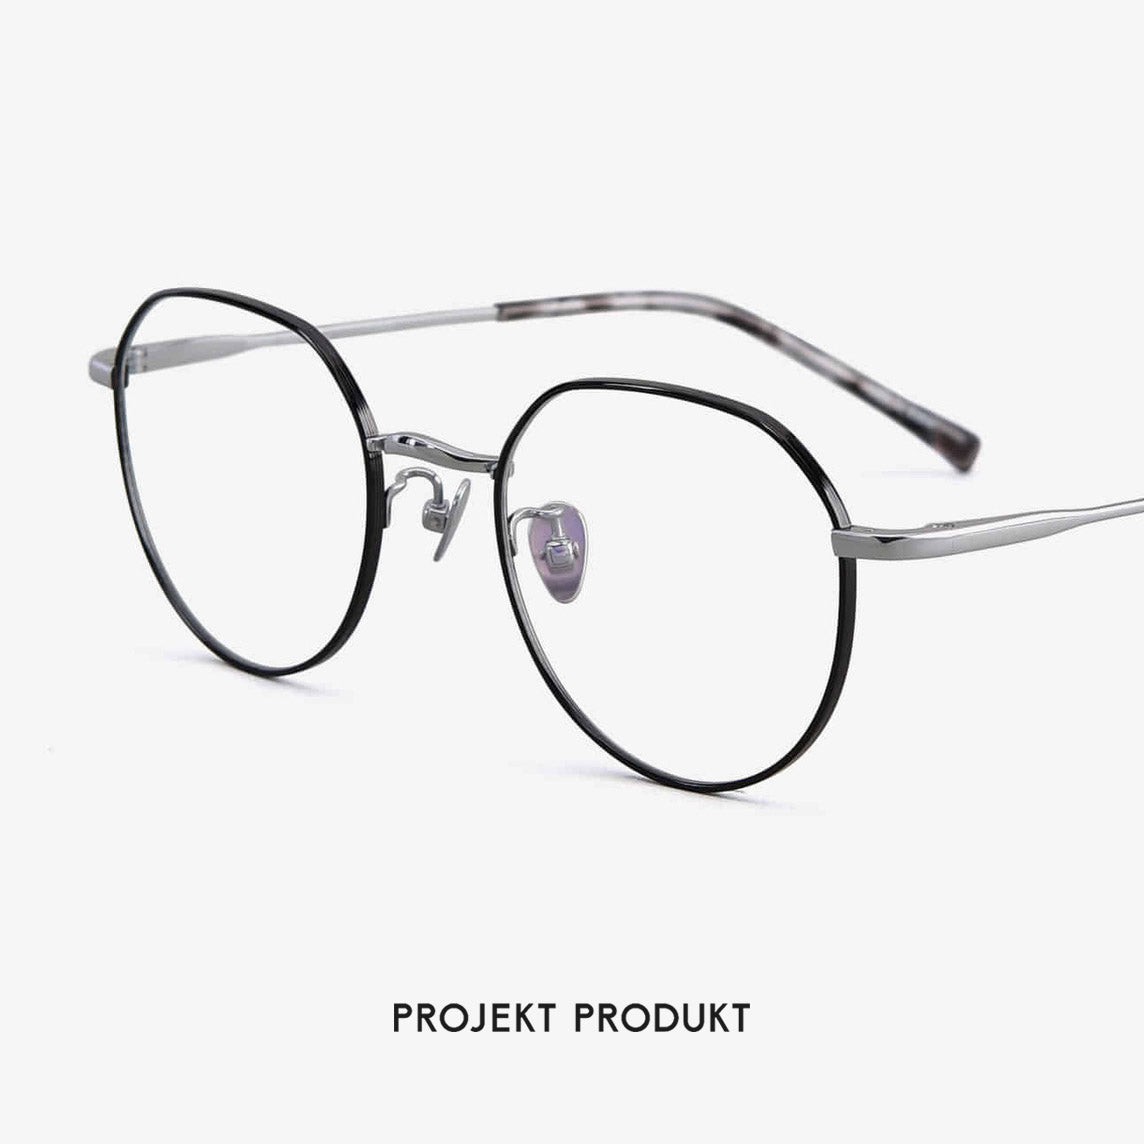 Projekt Produkt - AU13-S CBKWG【Pre-order Now】